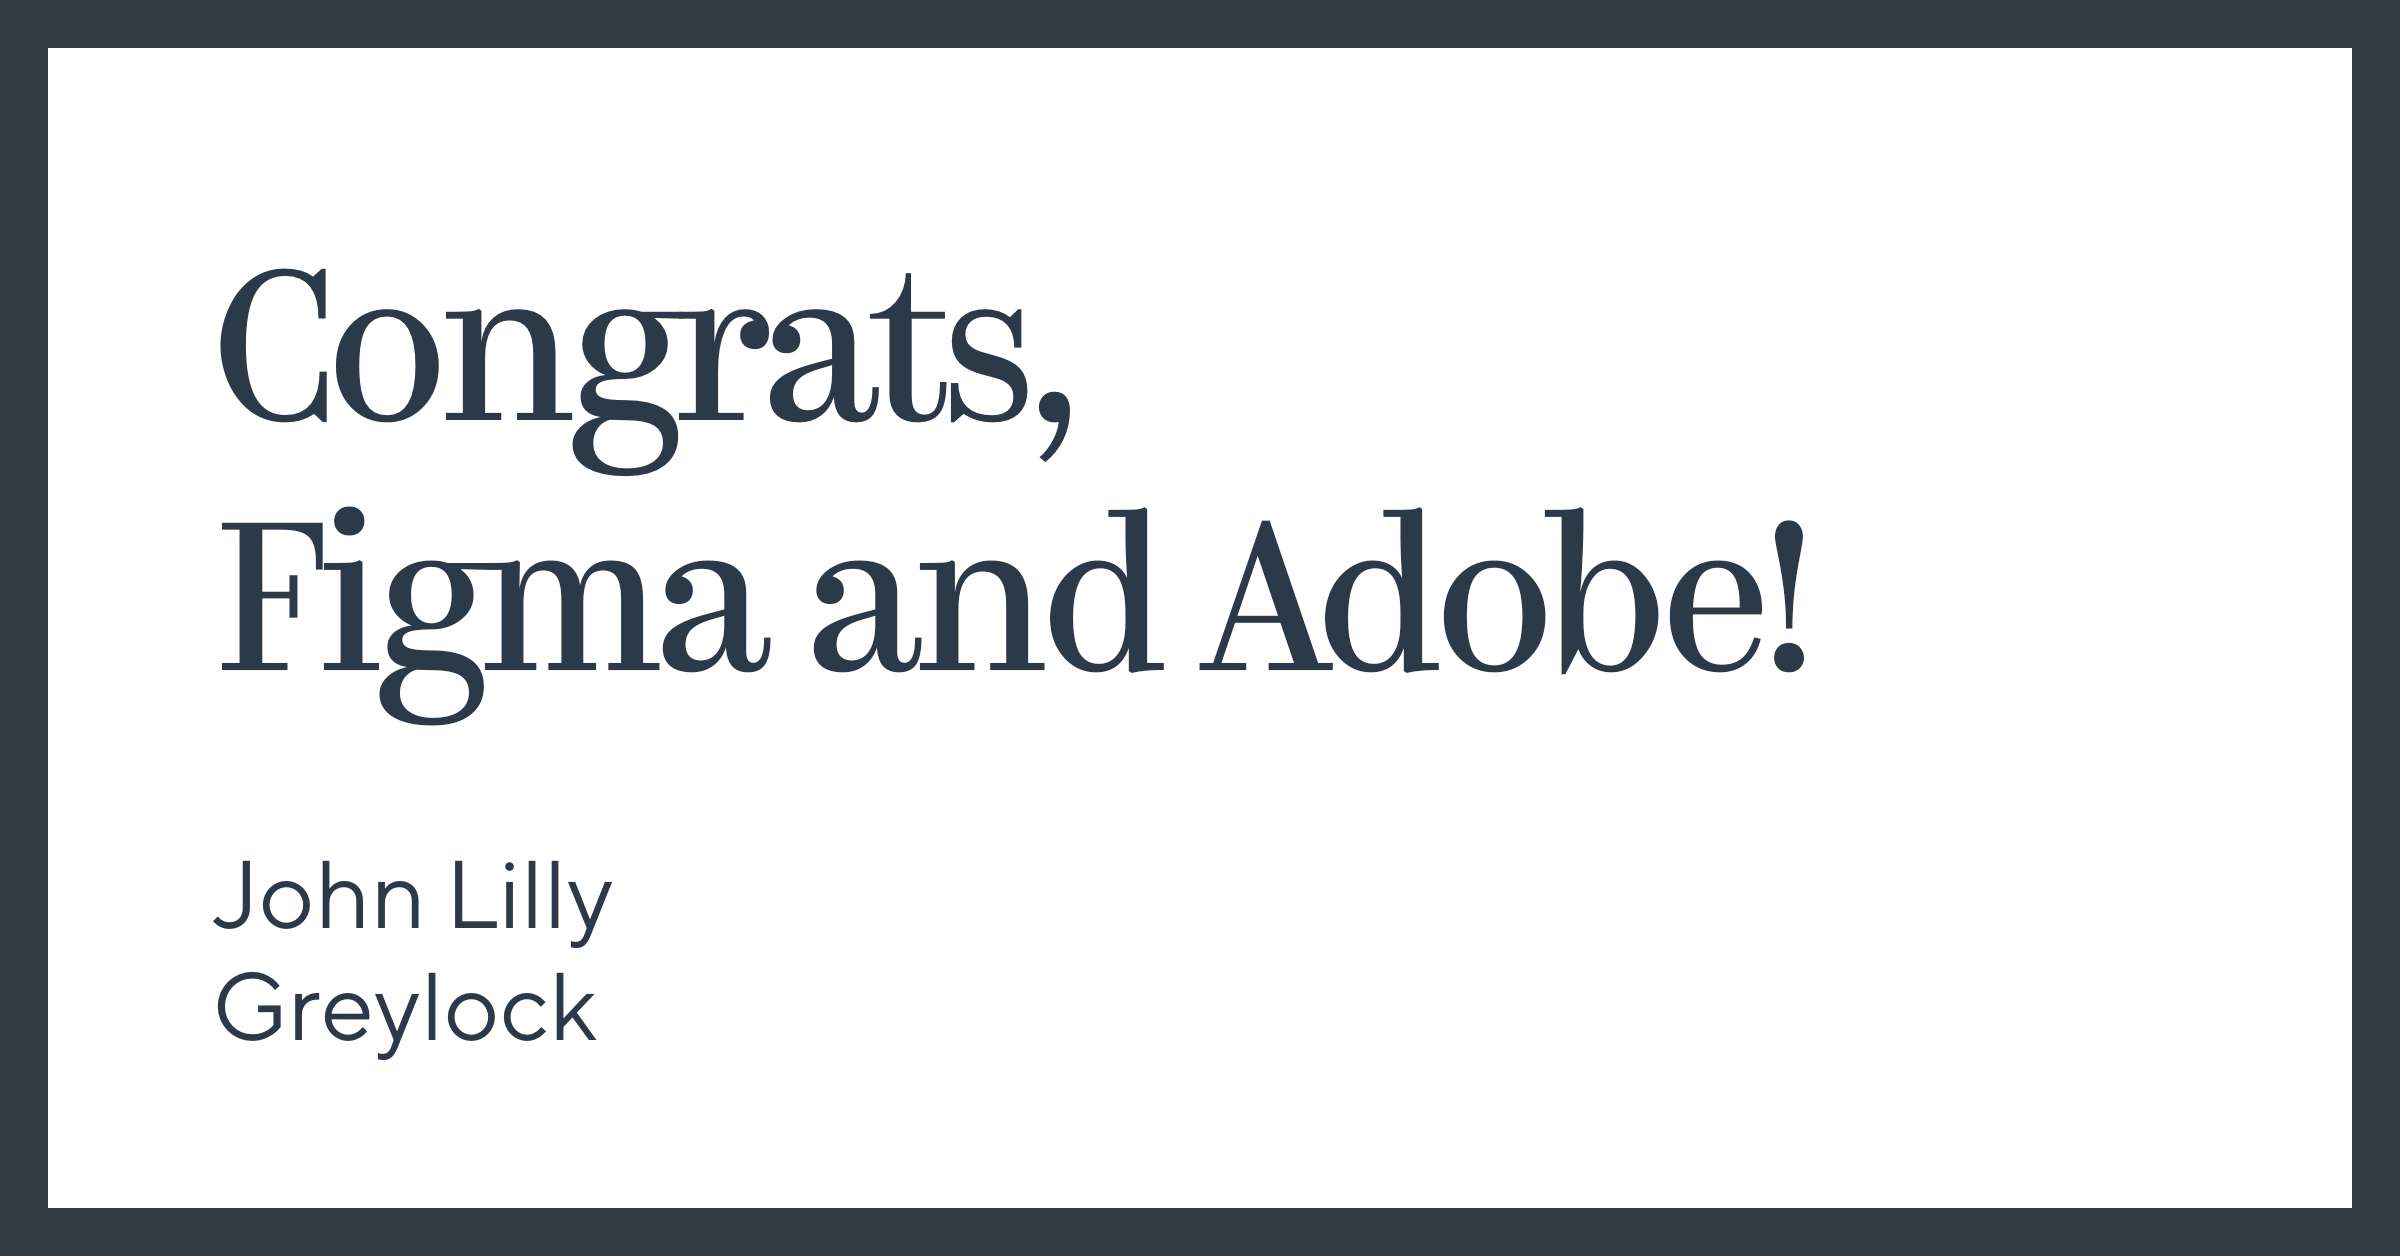 Congrats, Figma and Adobe!